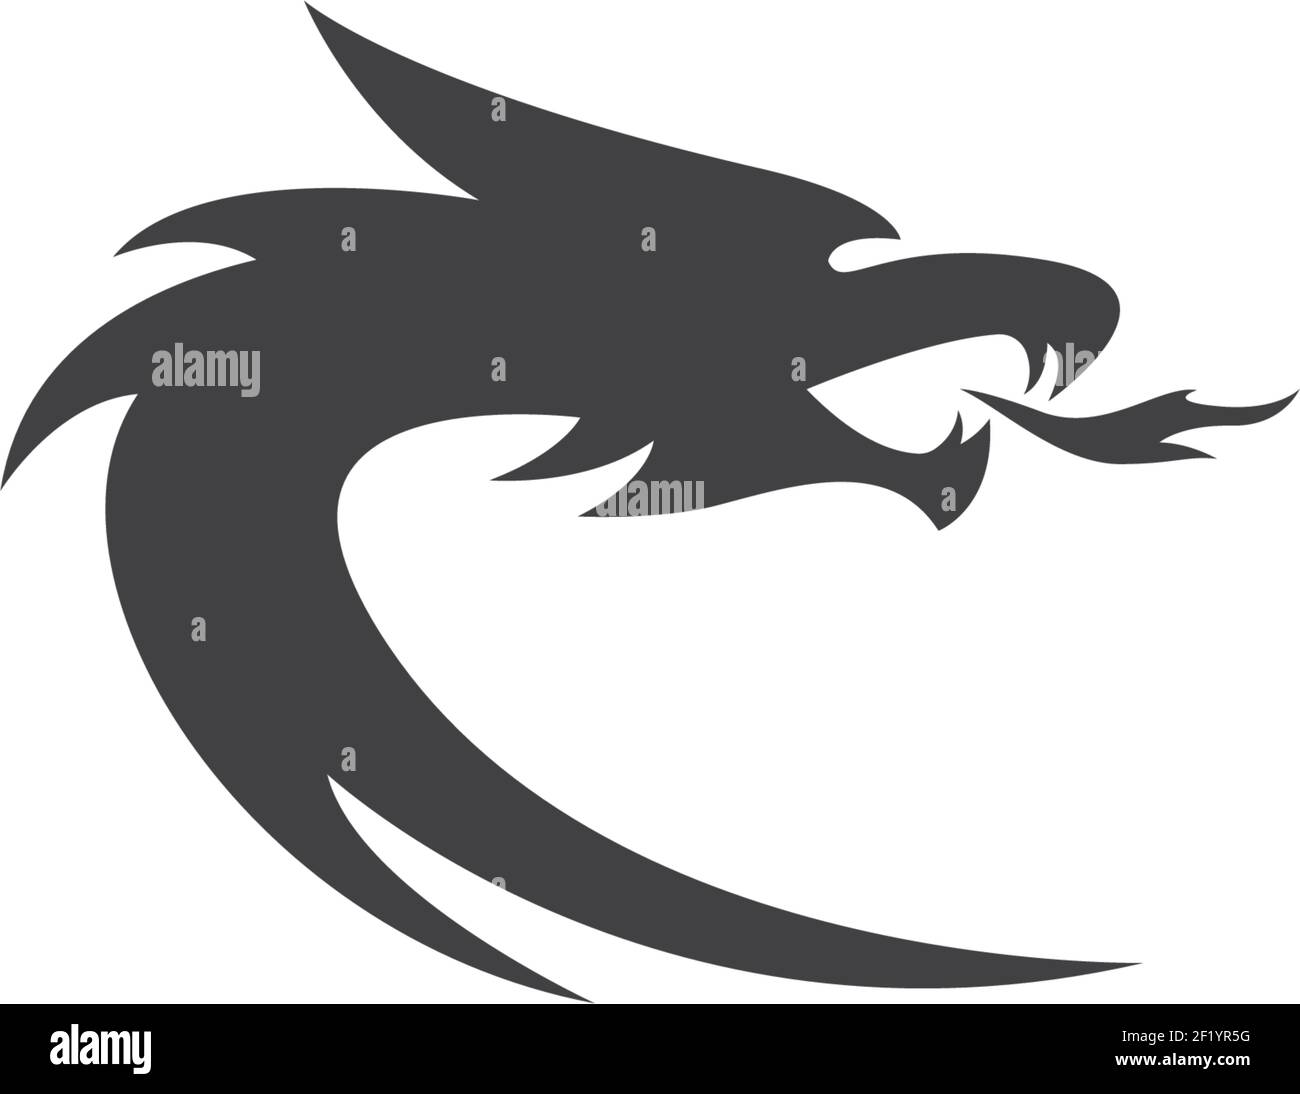 Dragon head logo template vector icon illustration Stock Vector Image ...